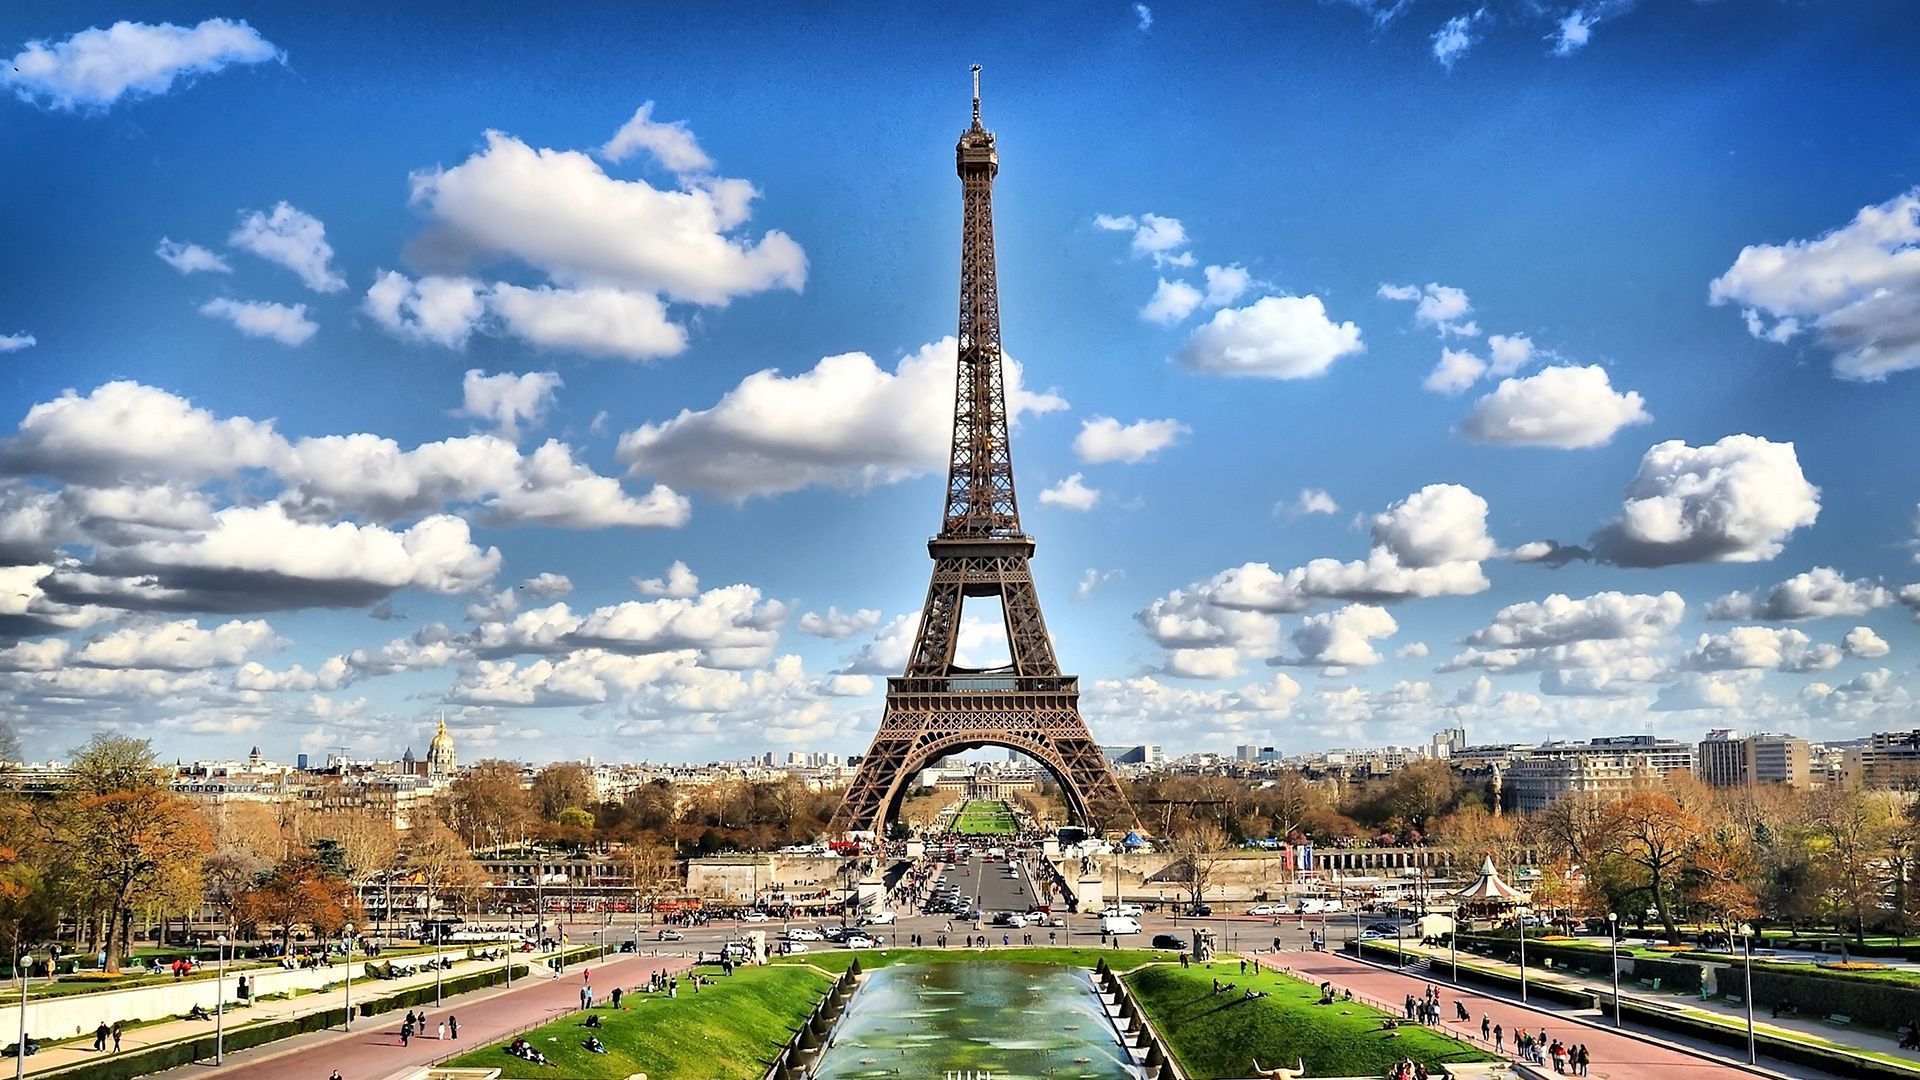 Paris City HD Wallpapers | Live HD Wallpaper HQ Pictures, Images ...